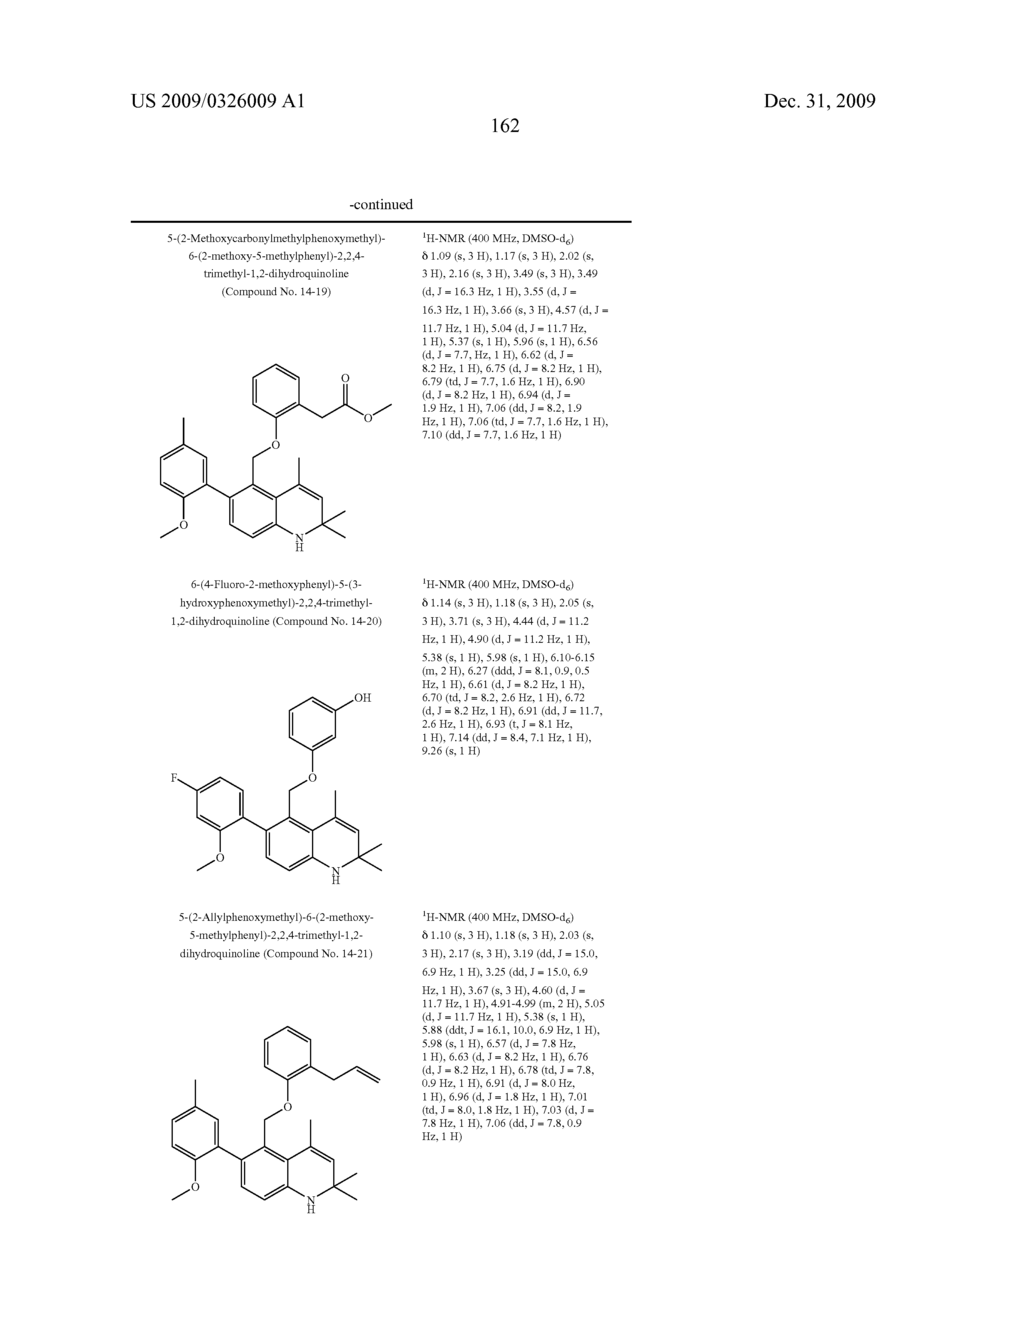 Novel 1-2-Dihydroquinoline Derivative Having Glucocorticoid Receptor Binding Activity - diagram, schematic, and image 163